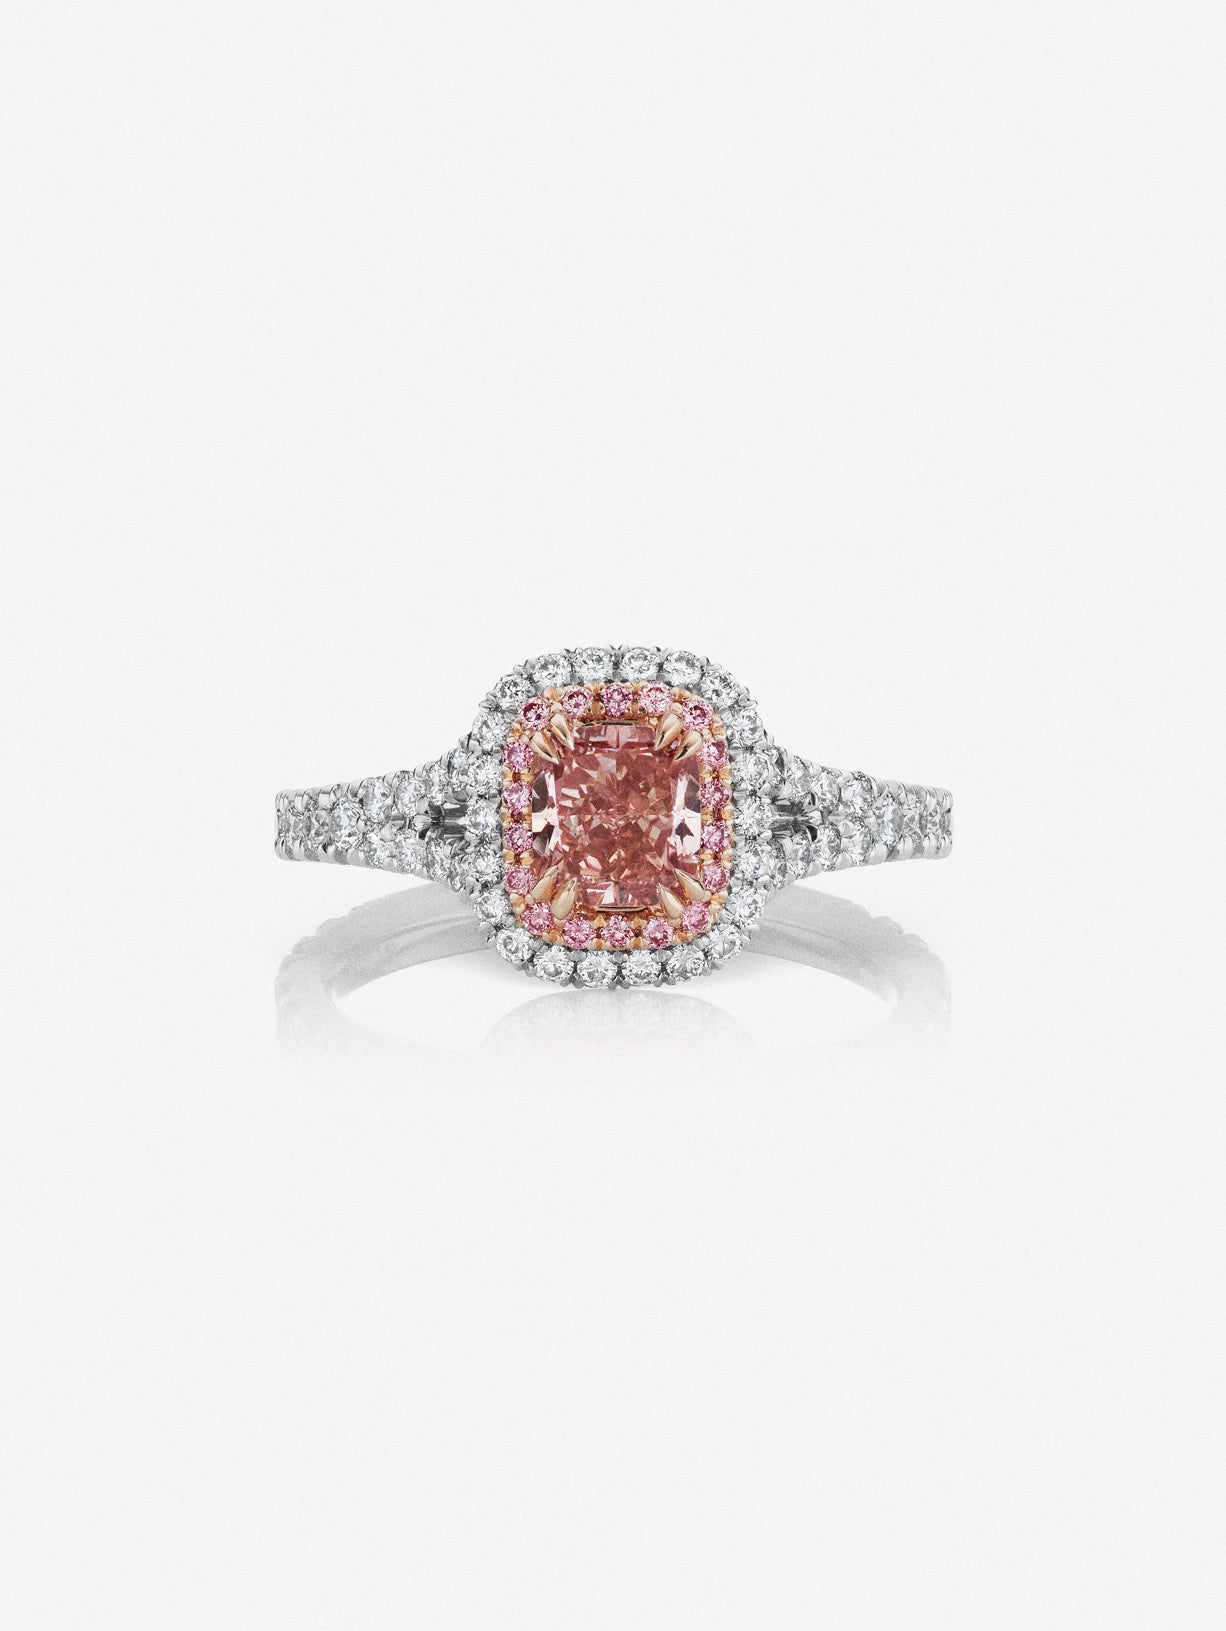 Fancy Orangy Pink Cushion Diamond Ring - Pink Diamonds, J FINE - J Fine, ring - Pink Diamond Jewelry, fancy-orangy-pink-cushion-diamond-ring-by-j-fine - Argyle Pink Diamonds